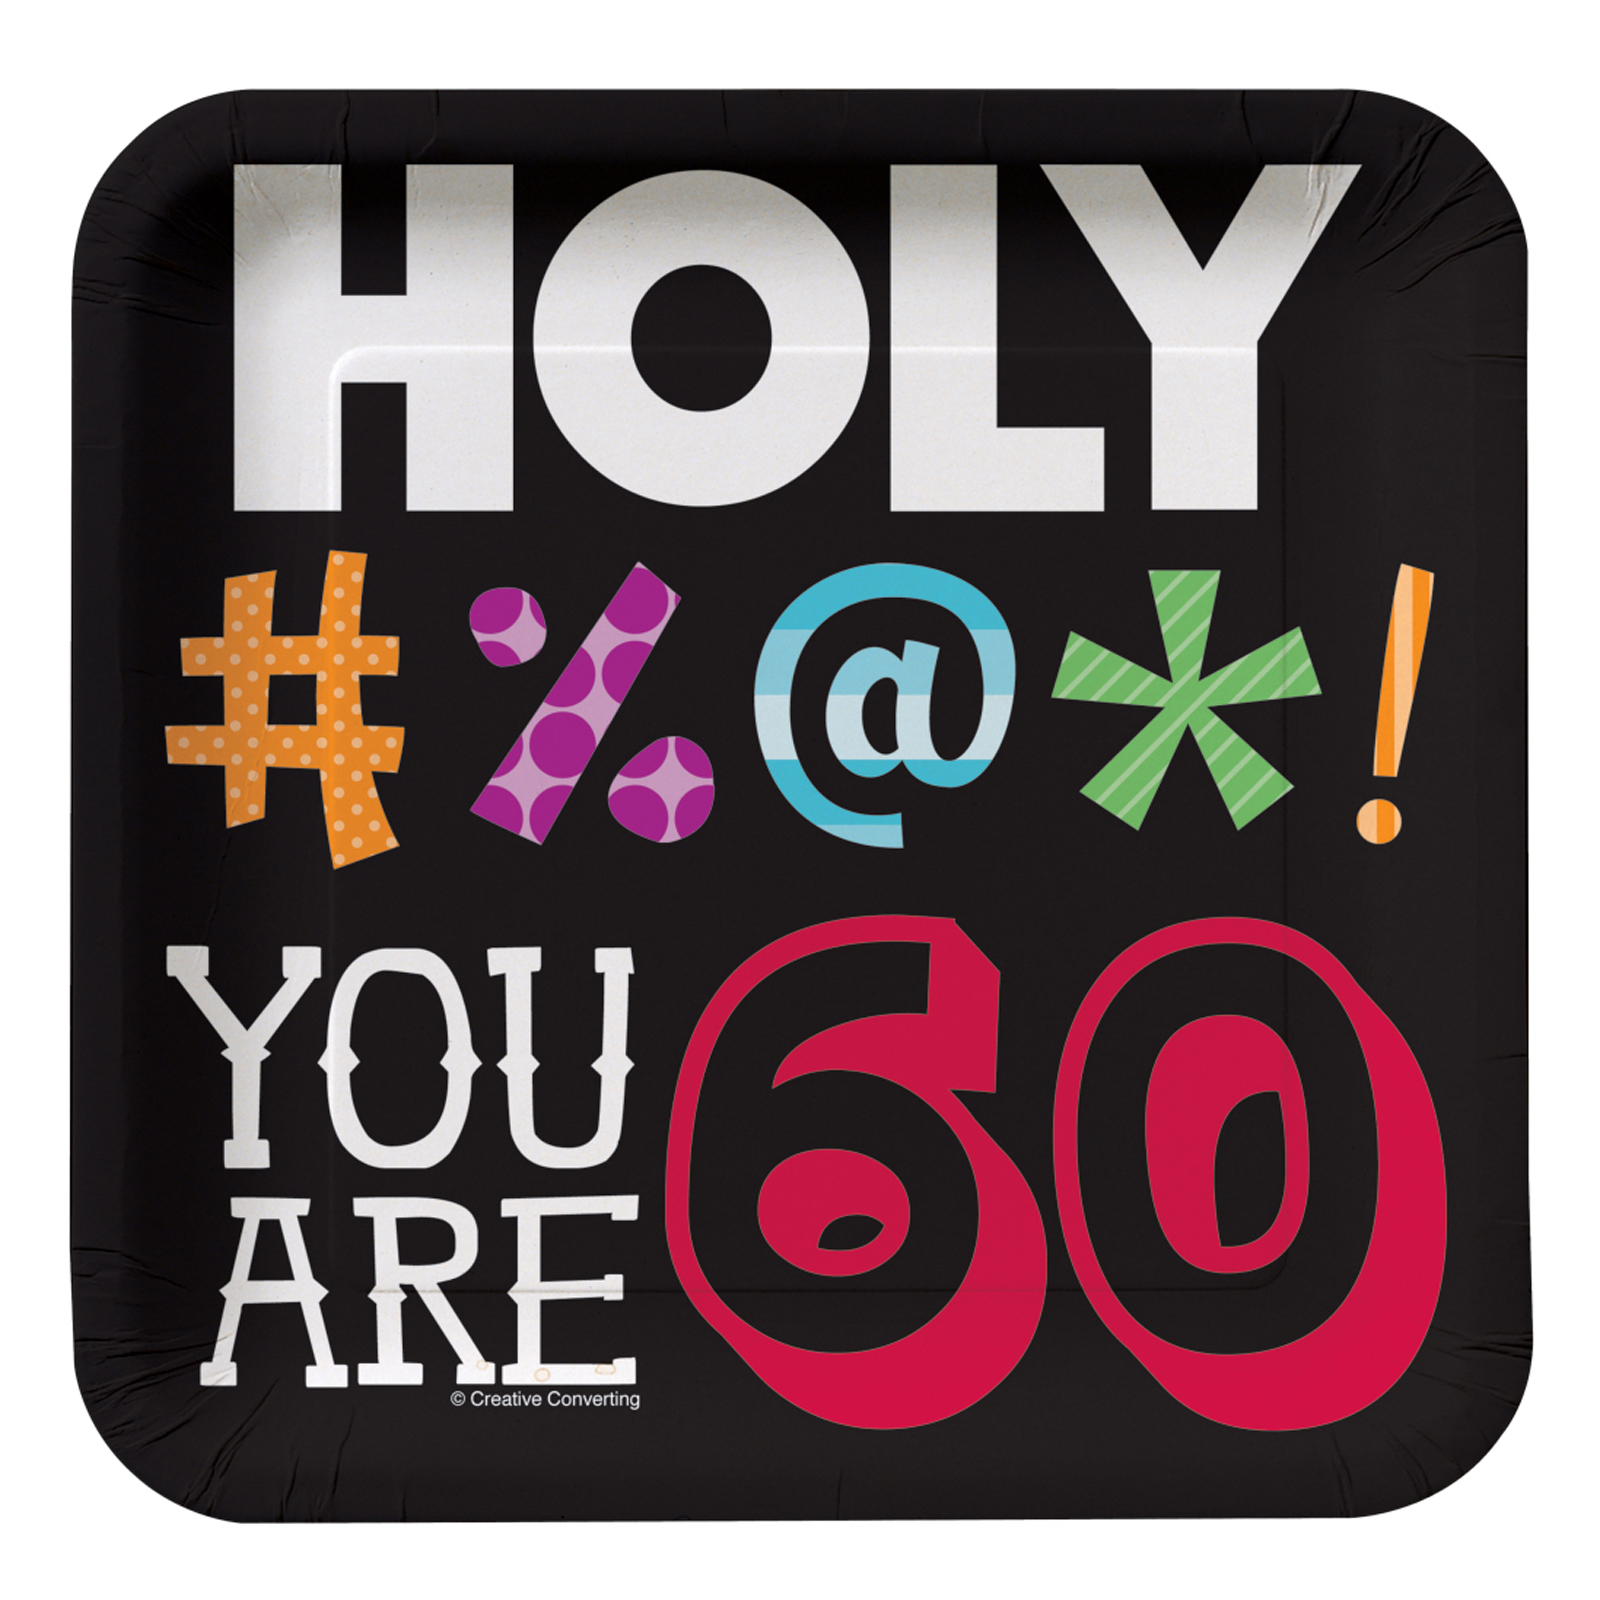 Pin Happy 60th Birthday Clip 